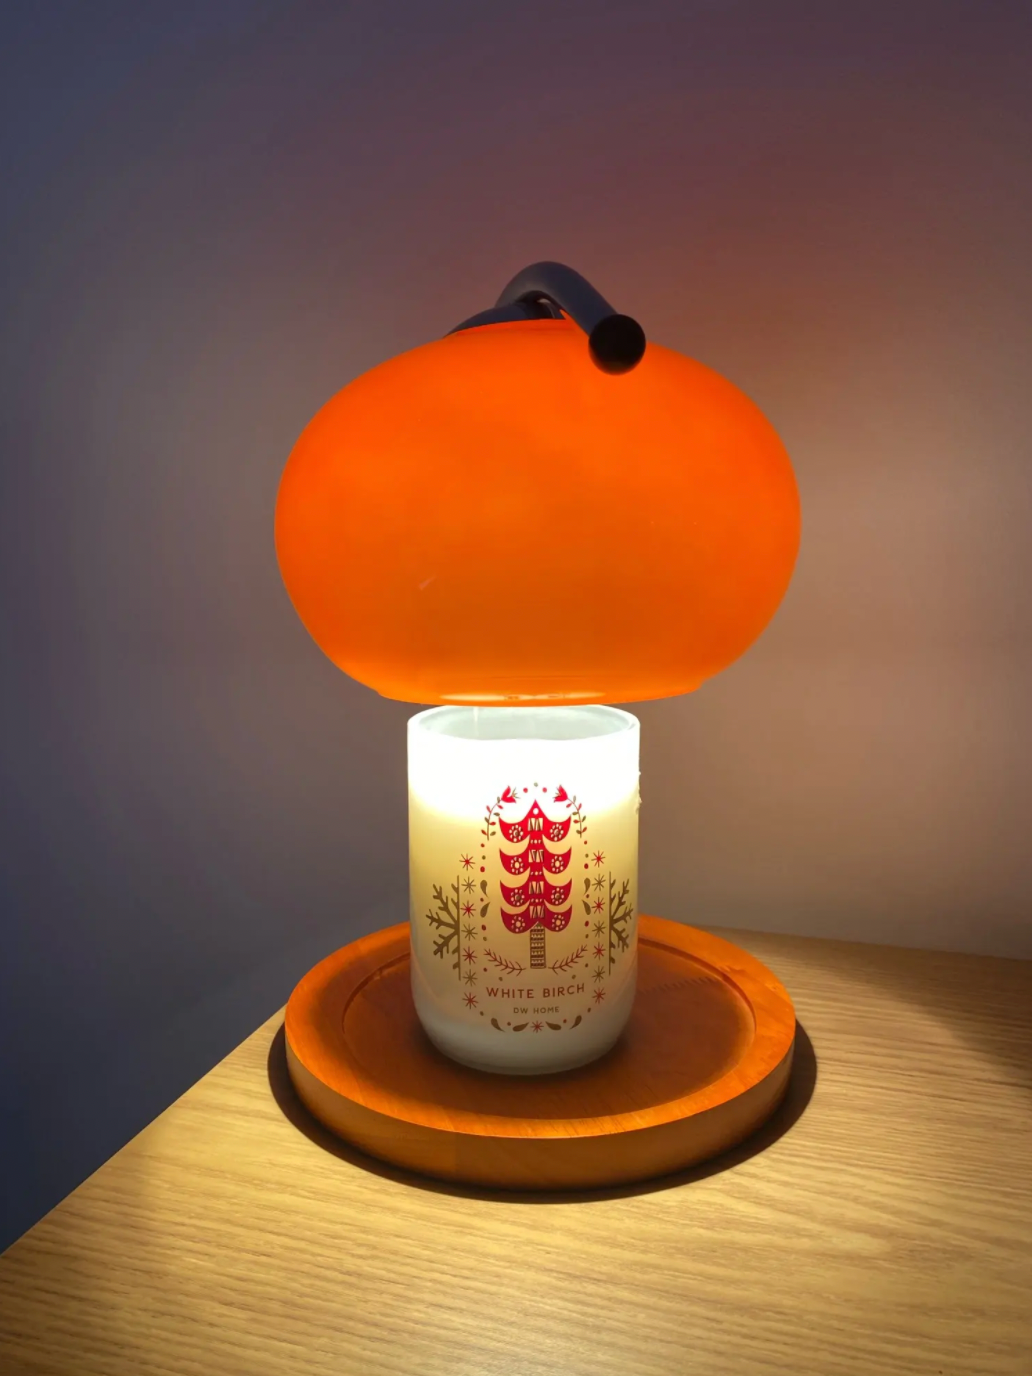 Chandelle - Candle melter lamp